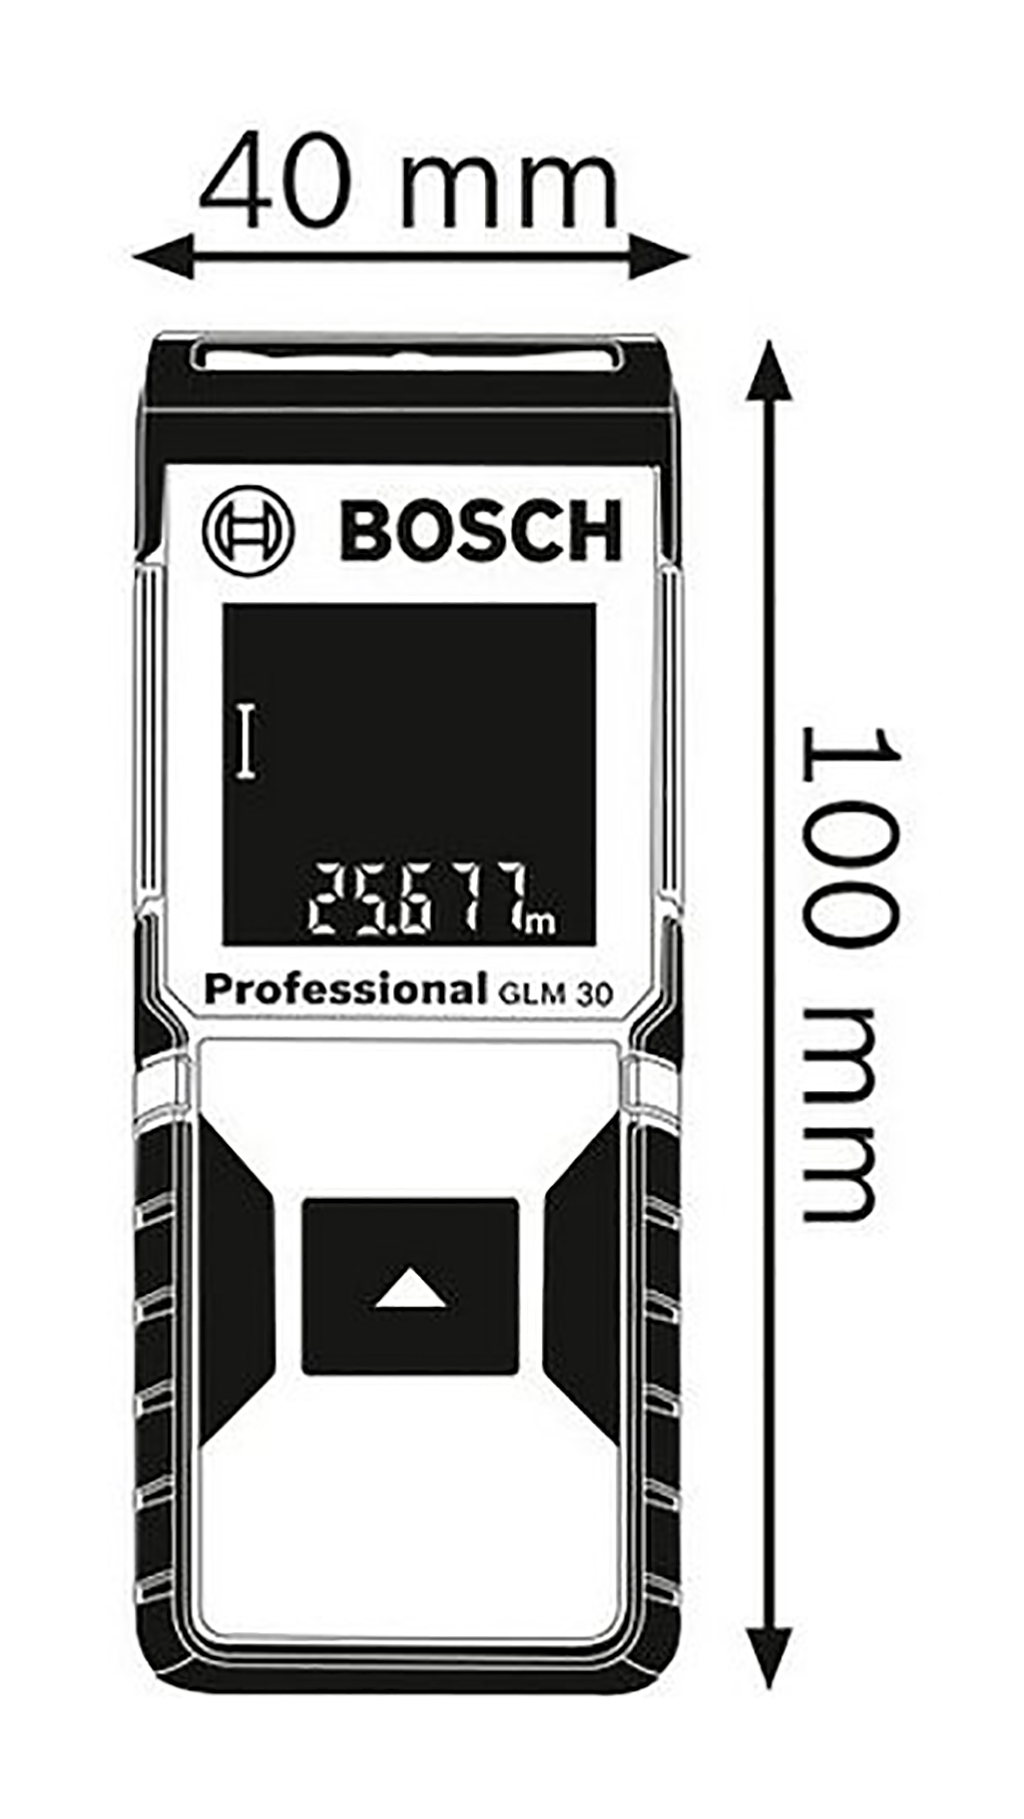 Description photo 1 of BOSCH GLM 30 PROFESSIONAL 30M<br>BOSCH GLM 30 ម៉ាស៊ីនឡាសែវ៉ាស់ចំងាយ 30 ម៉ែត្រ